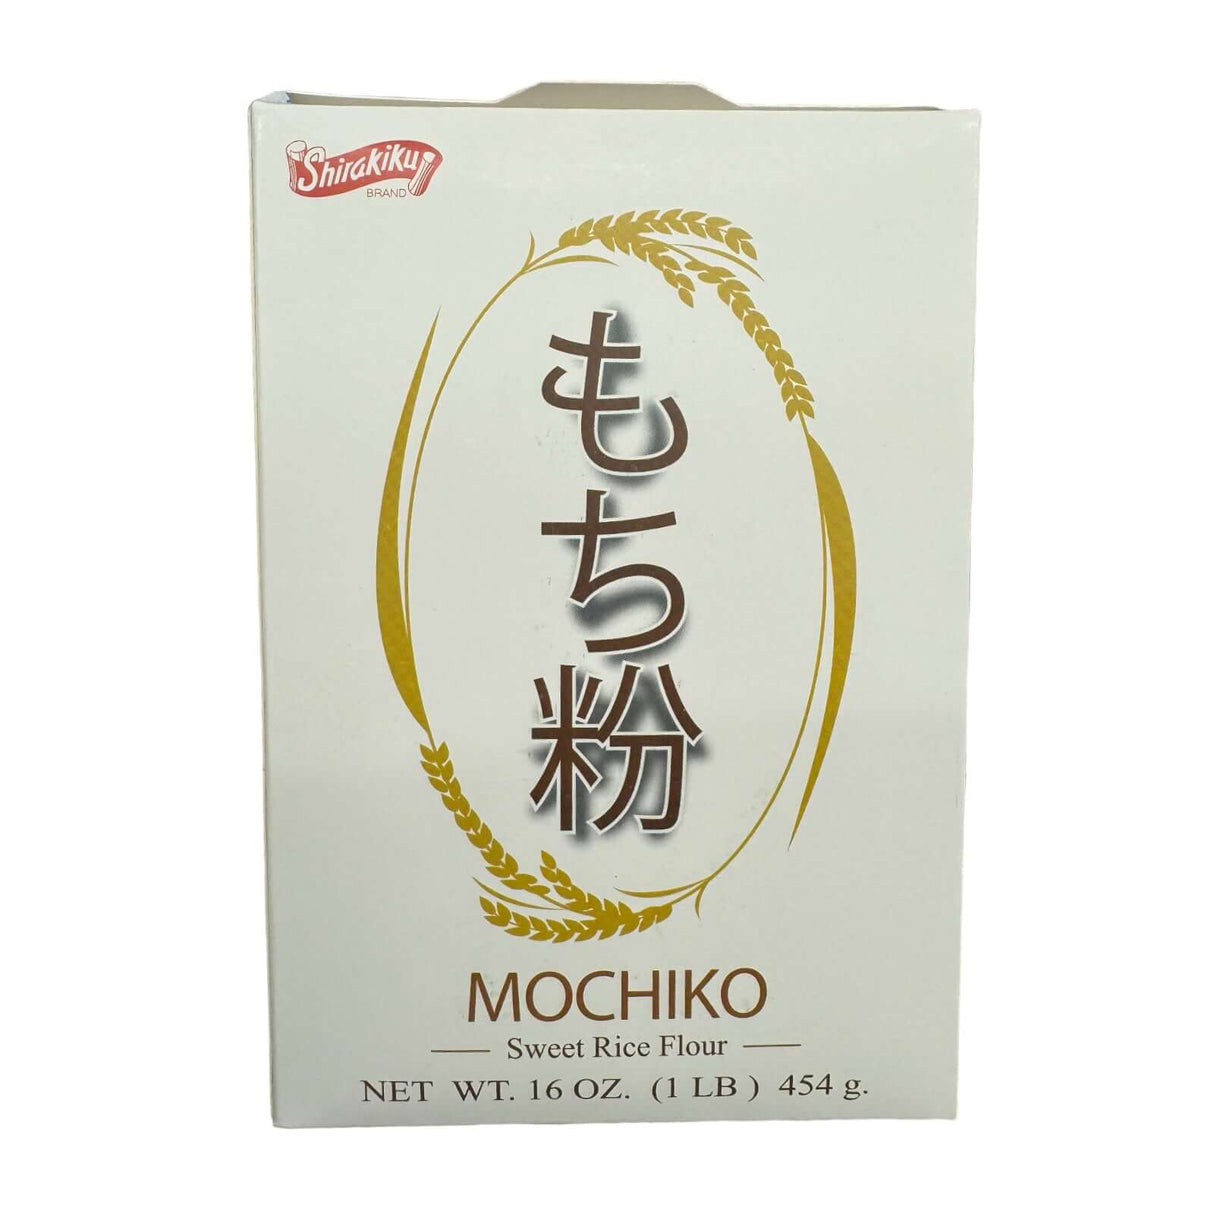 Shirakiku Brand Mochiko Sweet Rice Flour